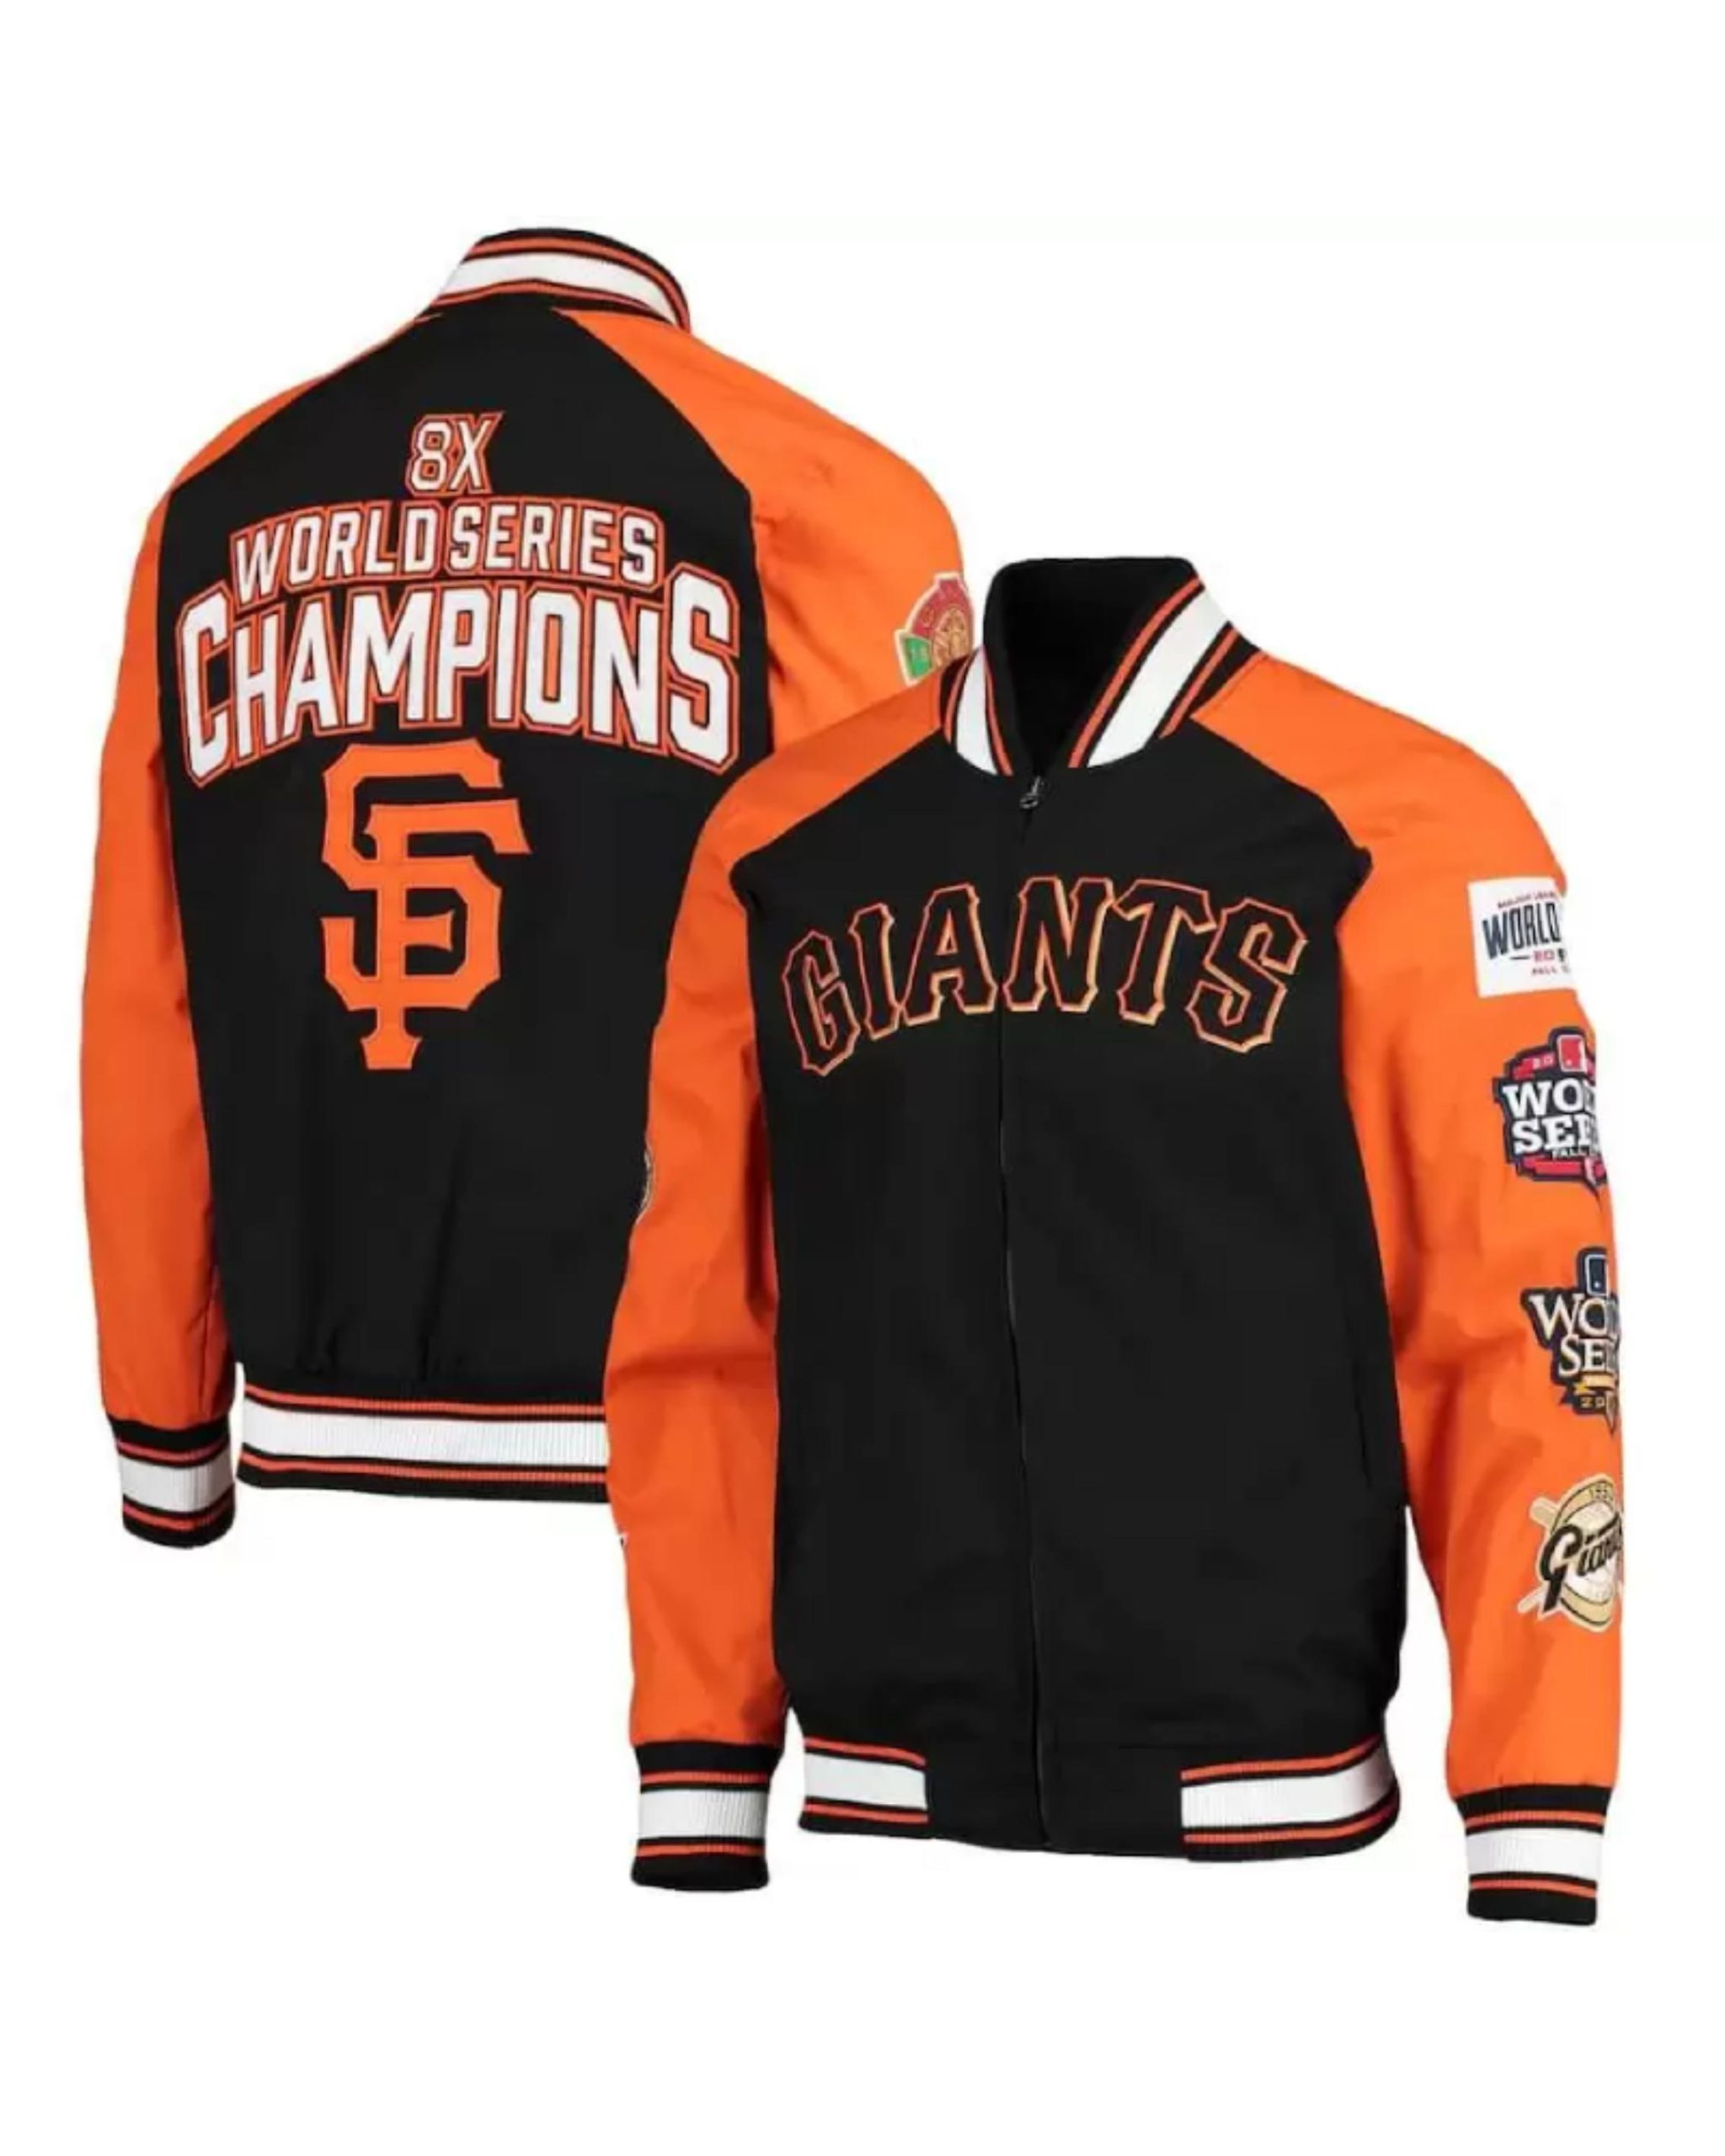 Black and Orange San Francisco Giants The Legend Jacket - HJacket